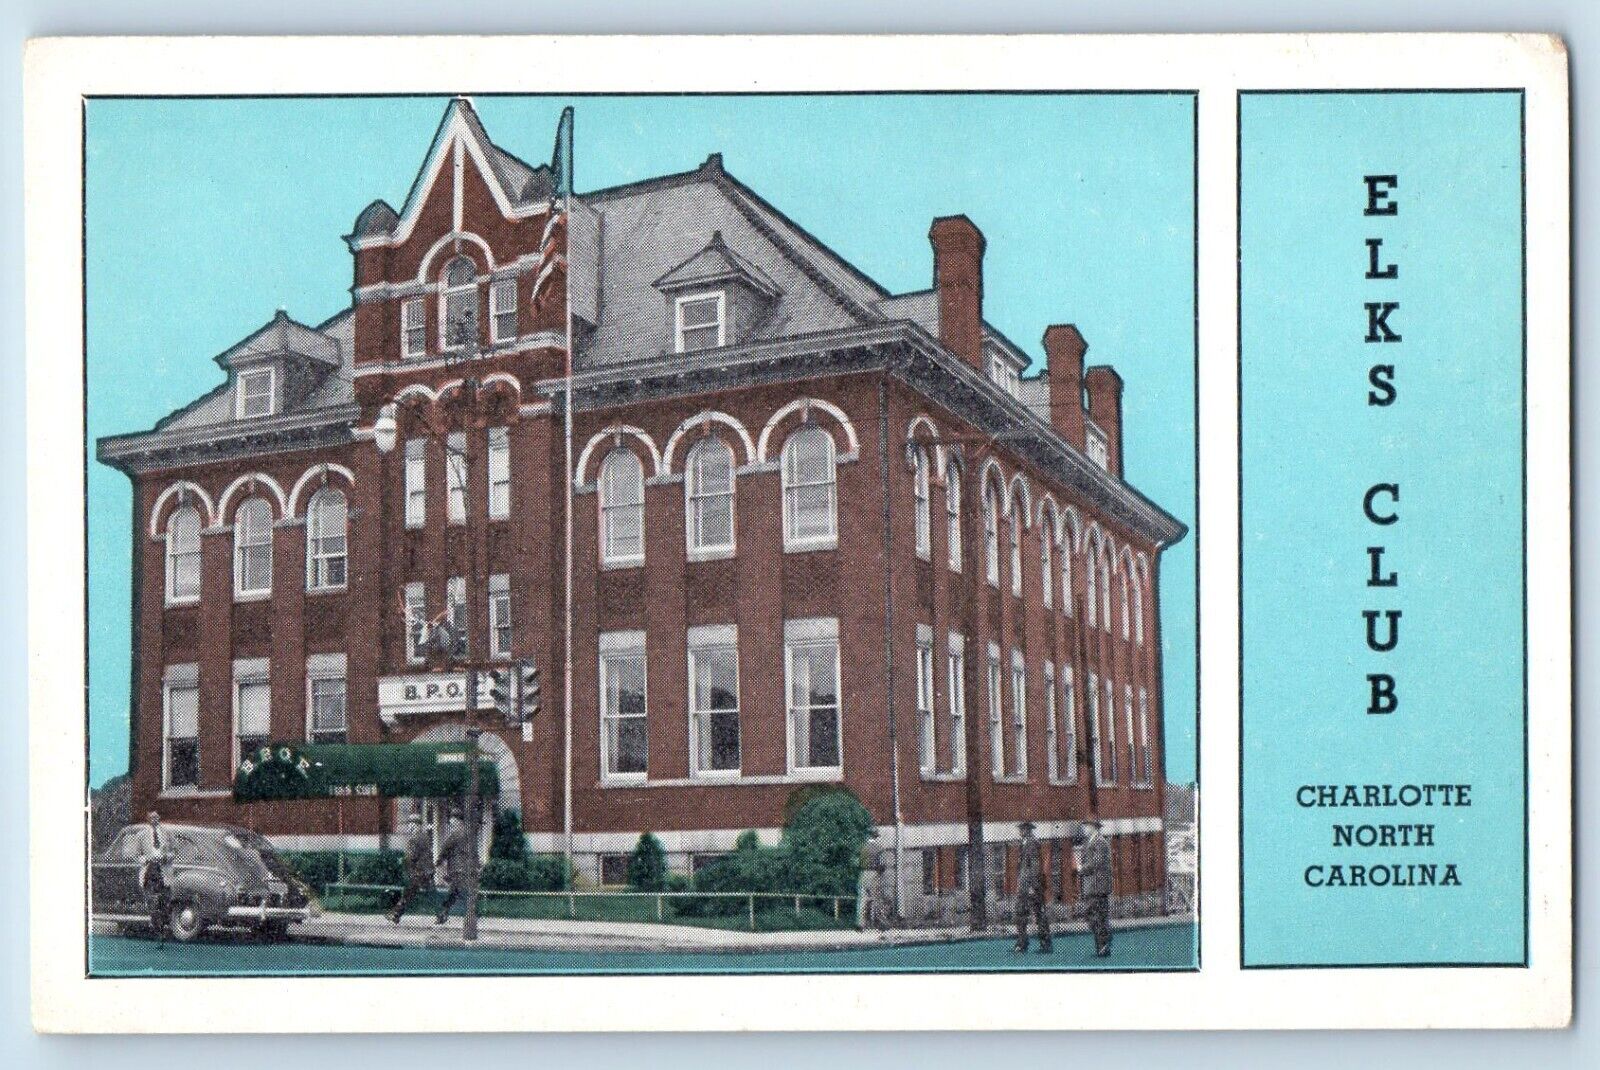 Charlotte North Carolina Postcard Elks Club Exterior Building View c1920 Vintage